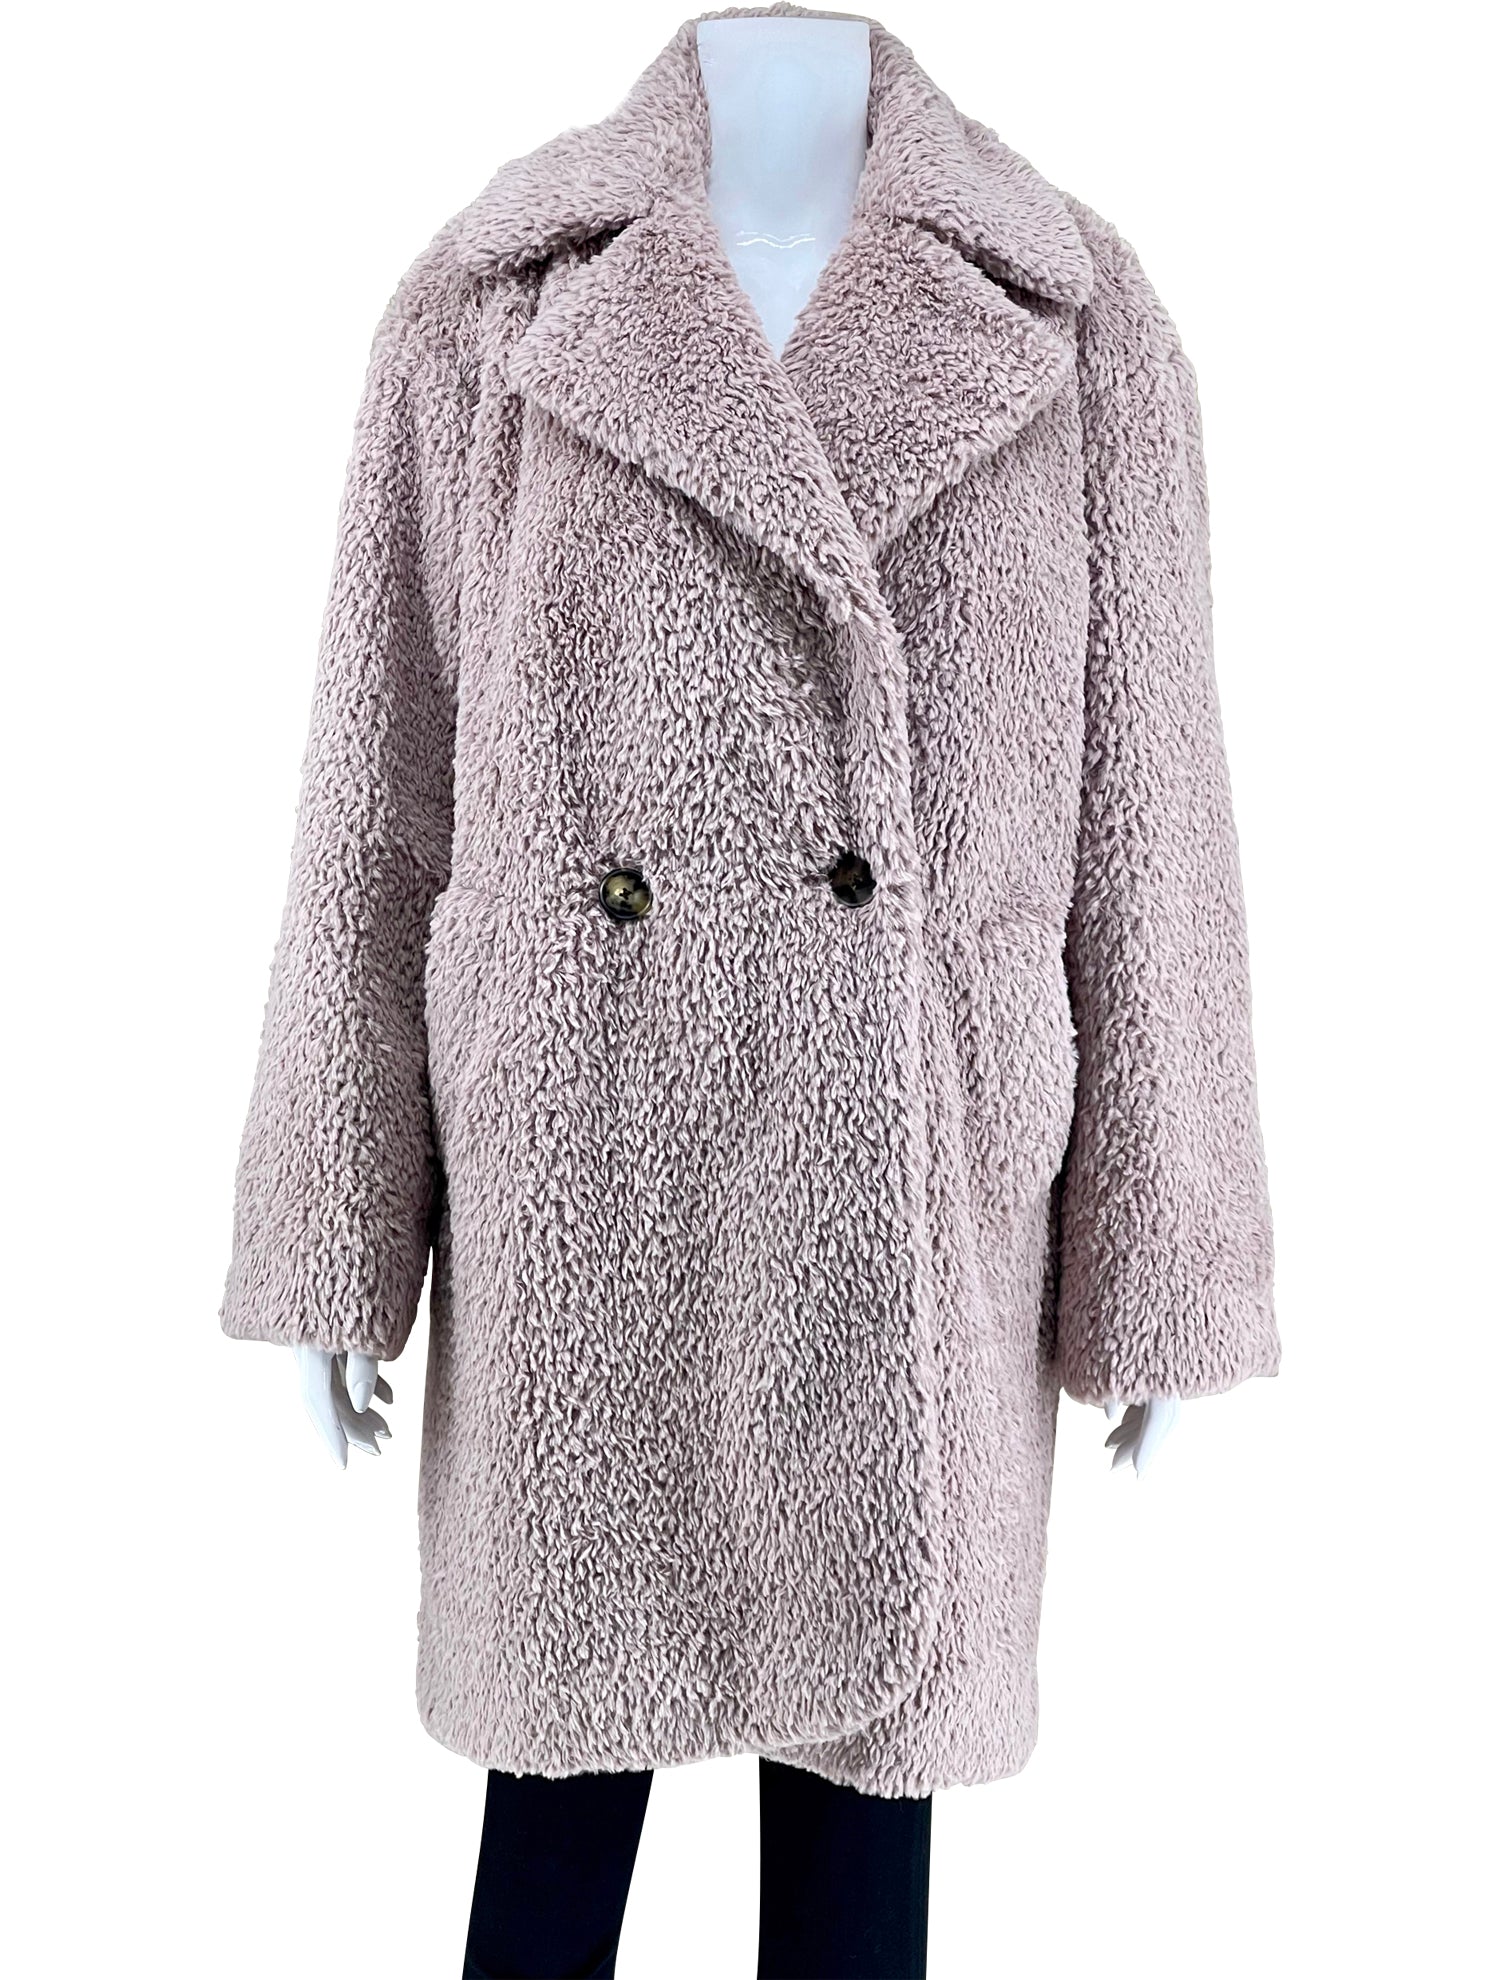 Kate Spade Blush Teddy Coat